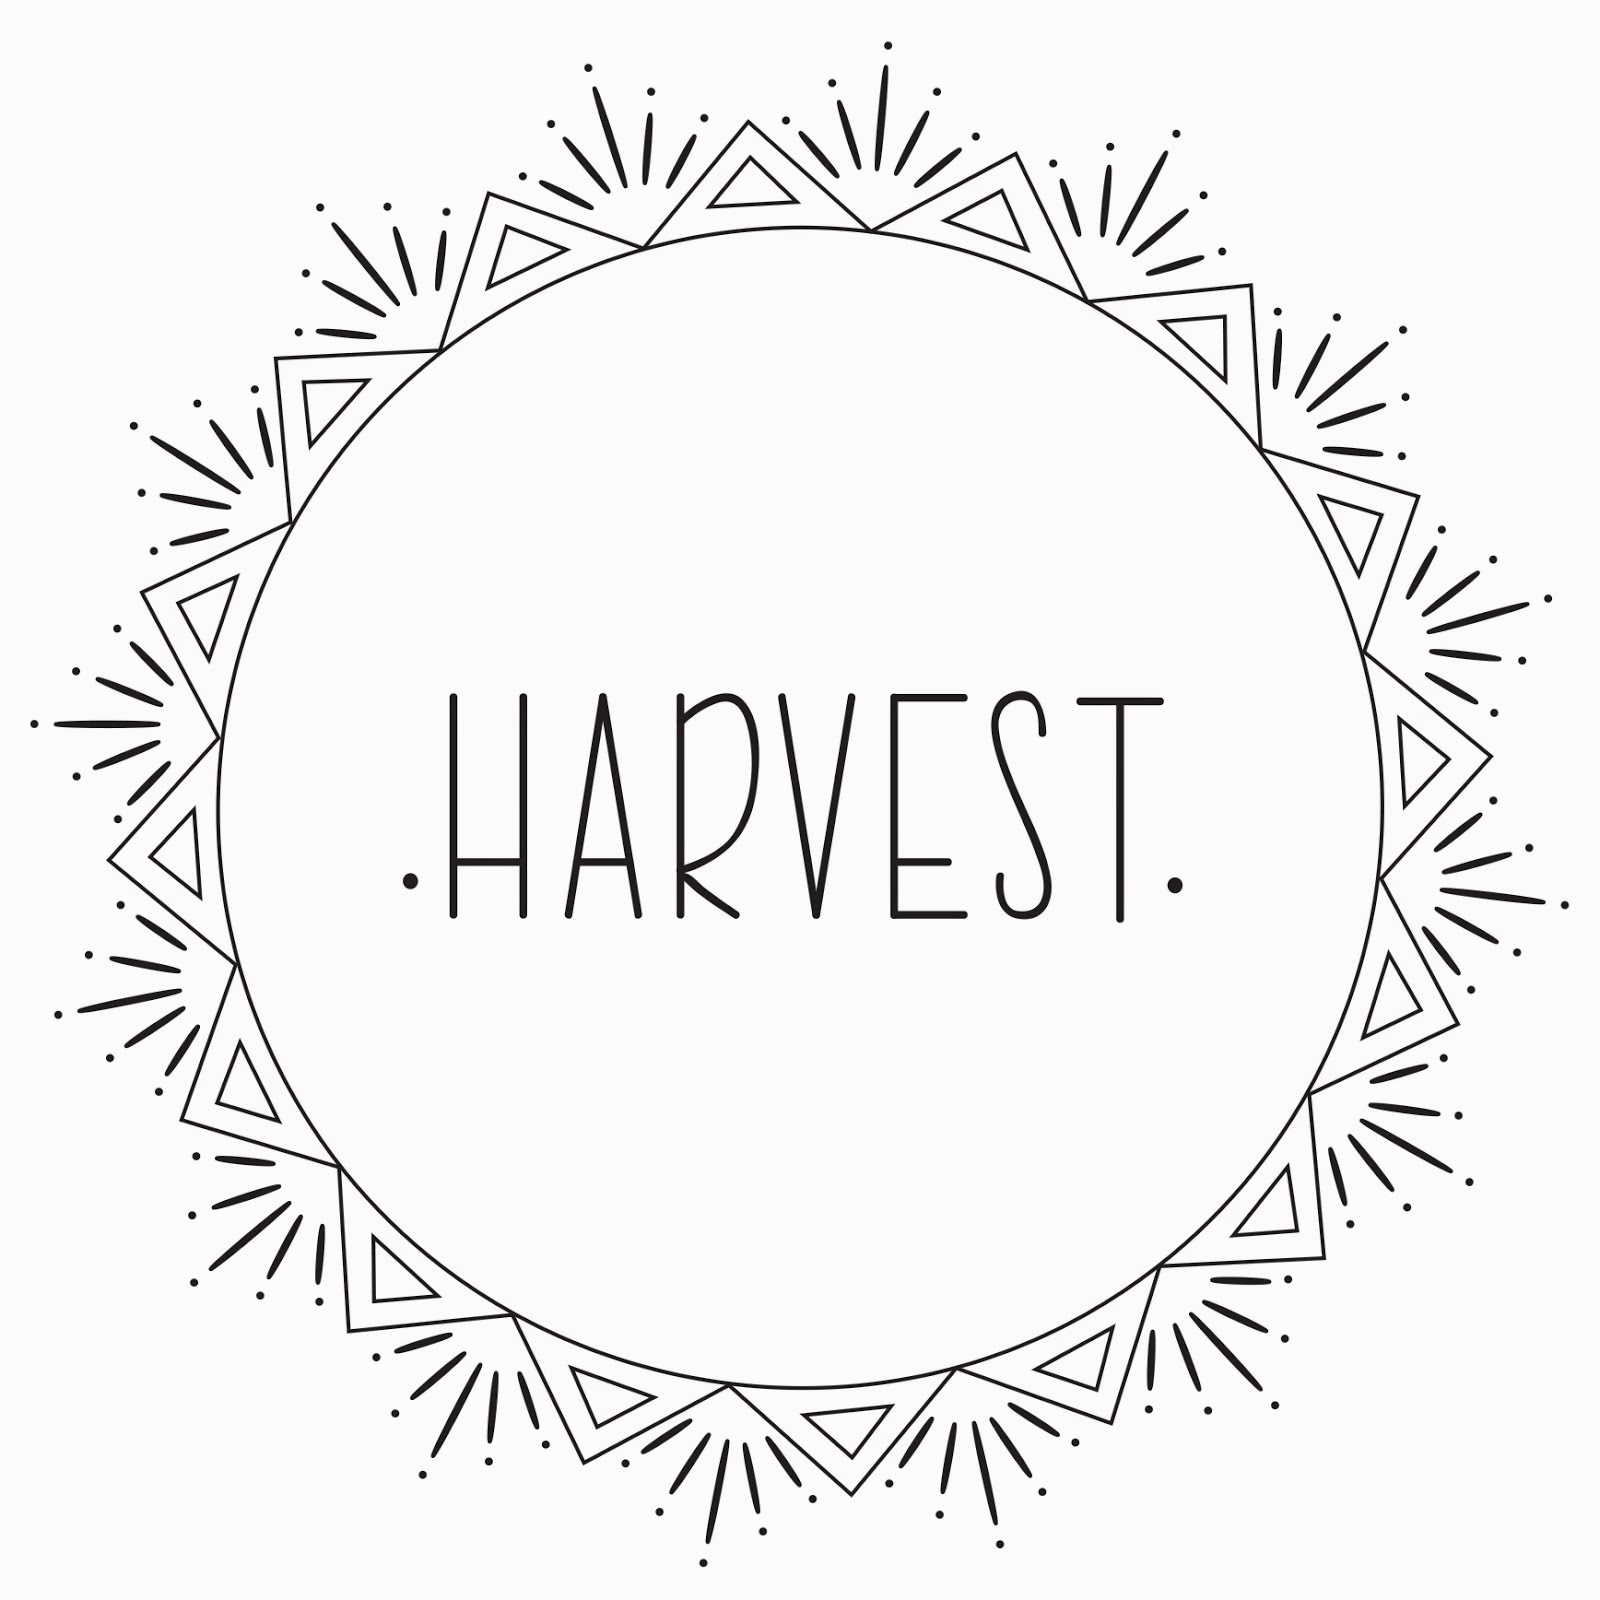                                                                harvest